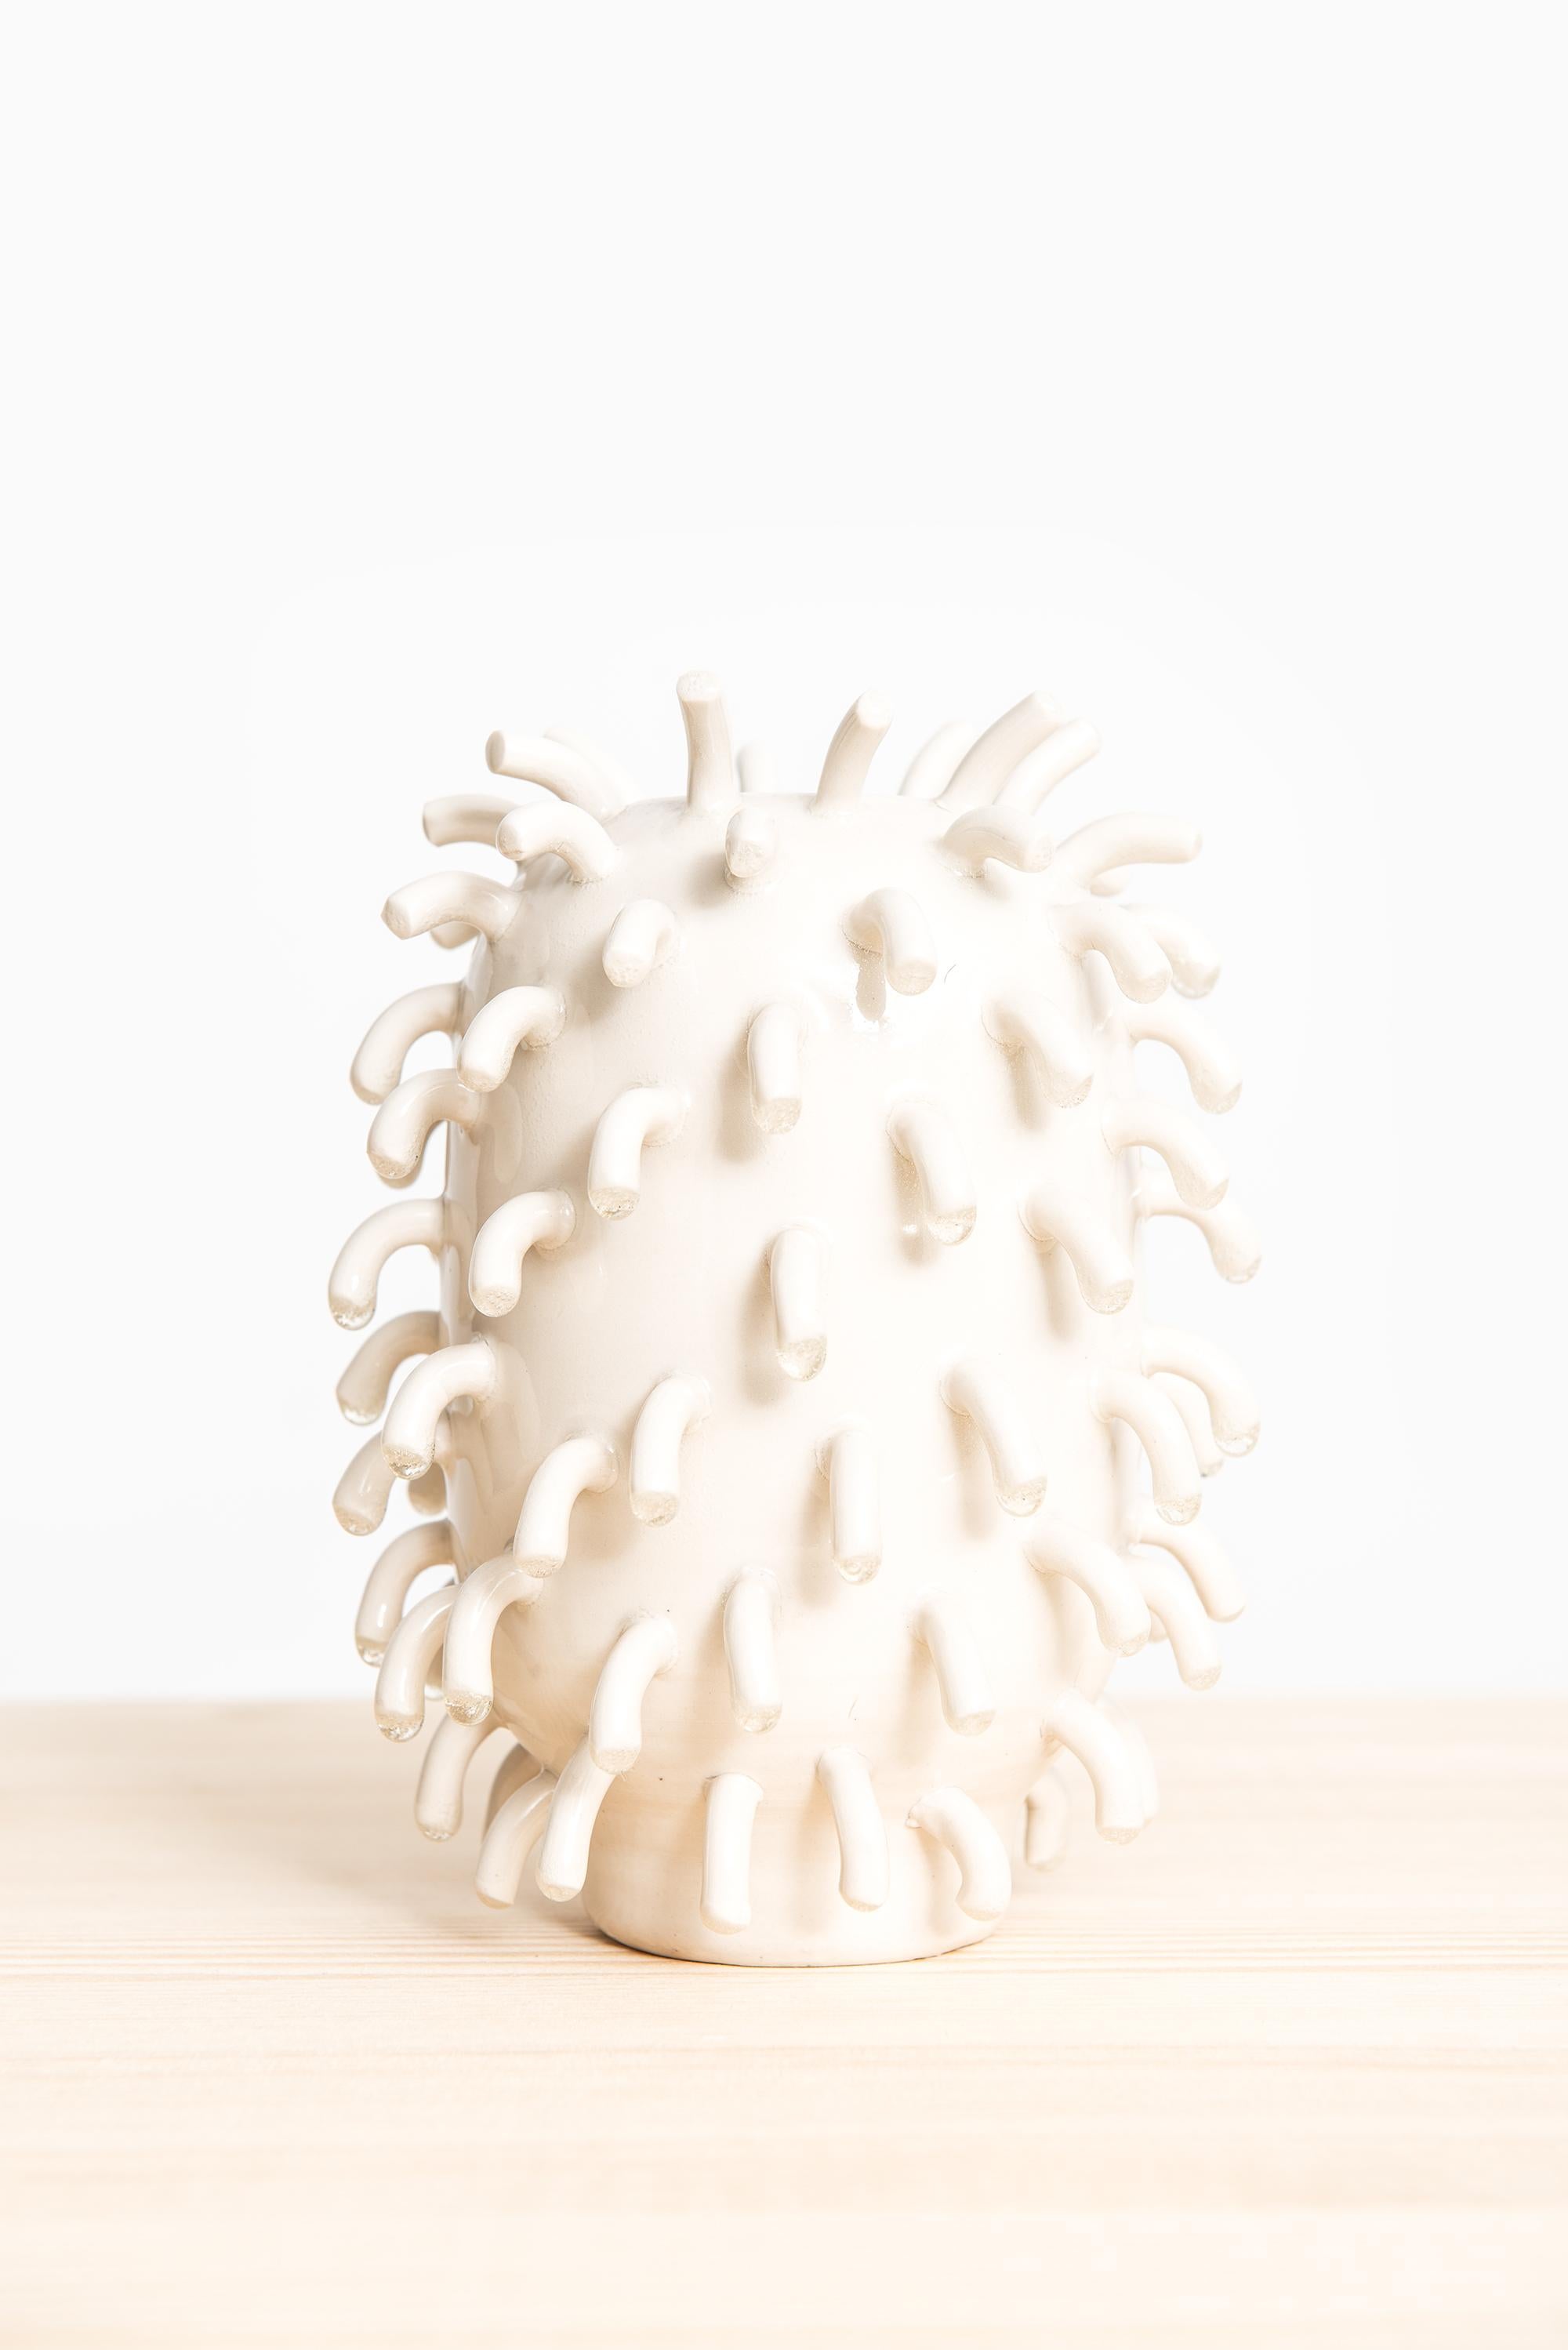 Ceramic vase model Hairy designed and produced by Mårten Medbo.